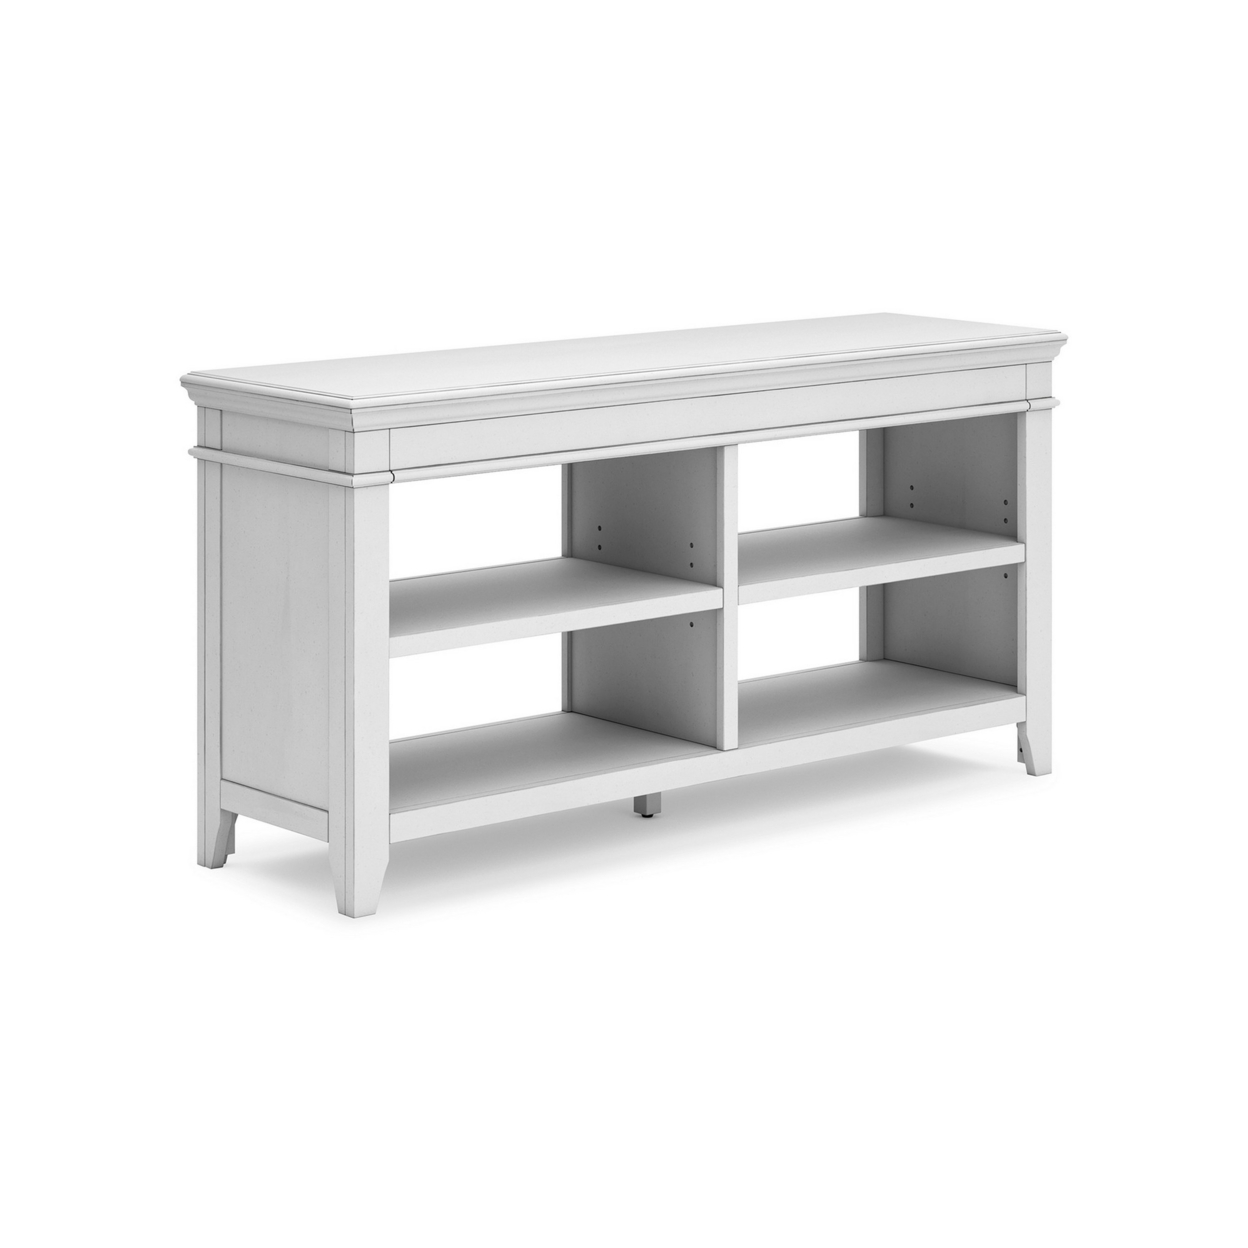 Vells 60 Inch Credenza Table, 2 Adjustable Shelves, Whitewashed Finish- Saltoro Sherpi